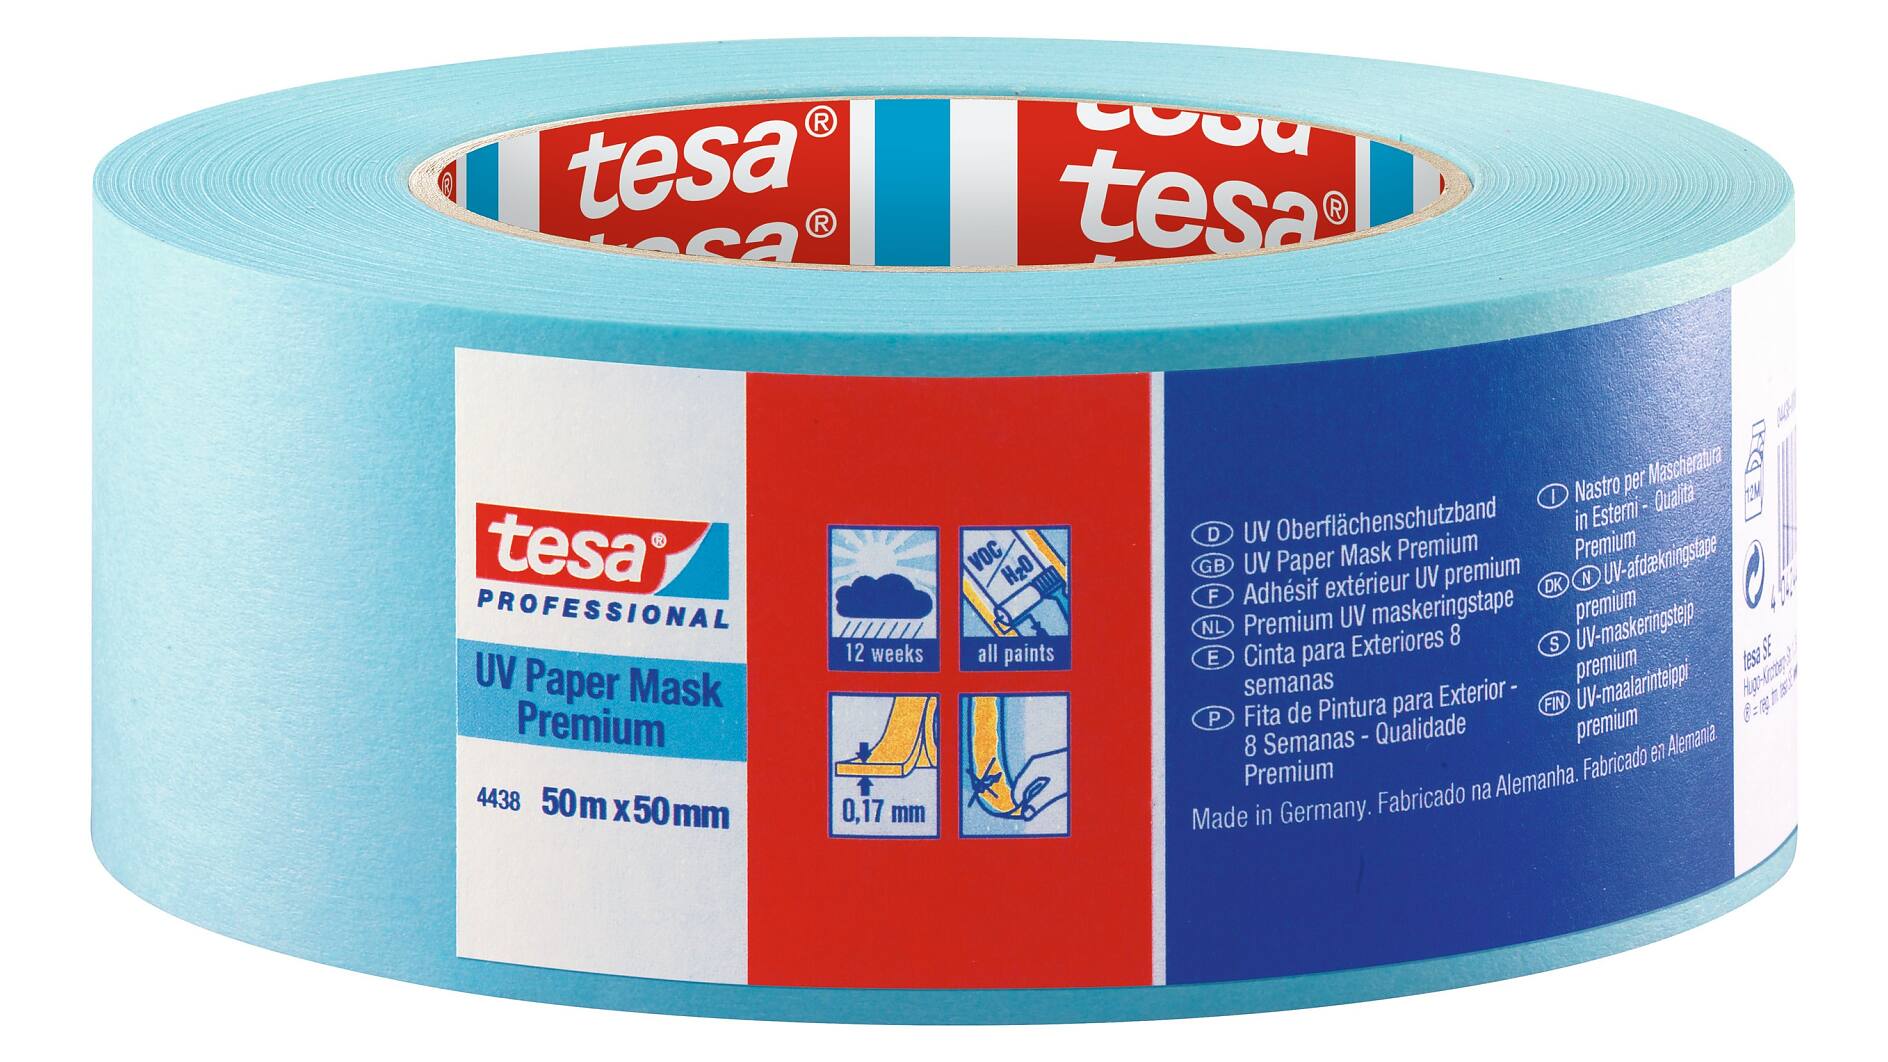 tesa® Professional 4438 UV Paper Mask Premium - tesa